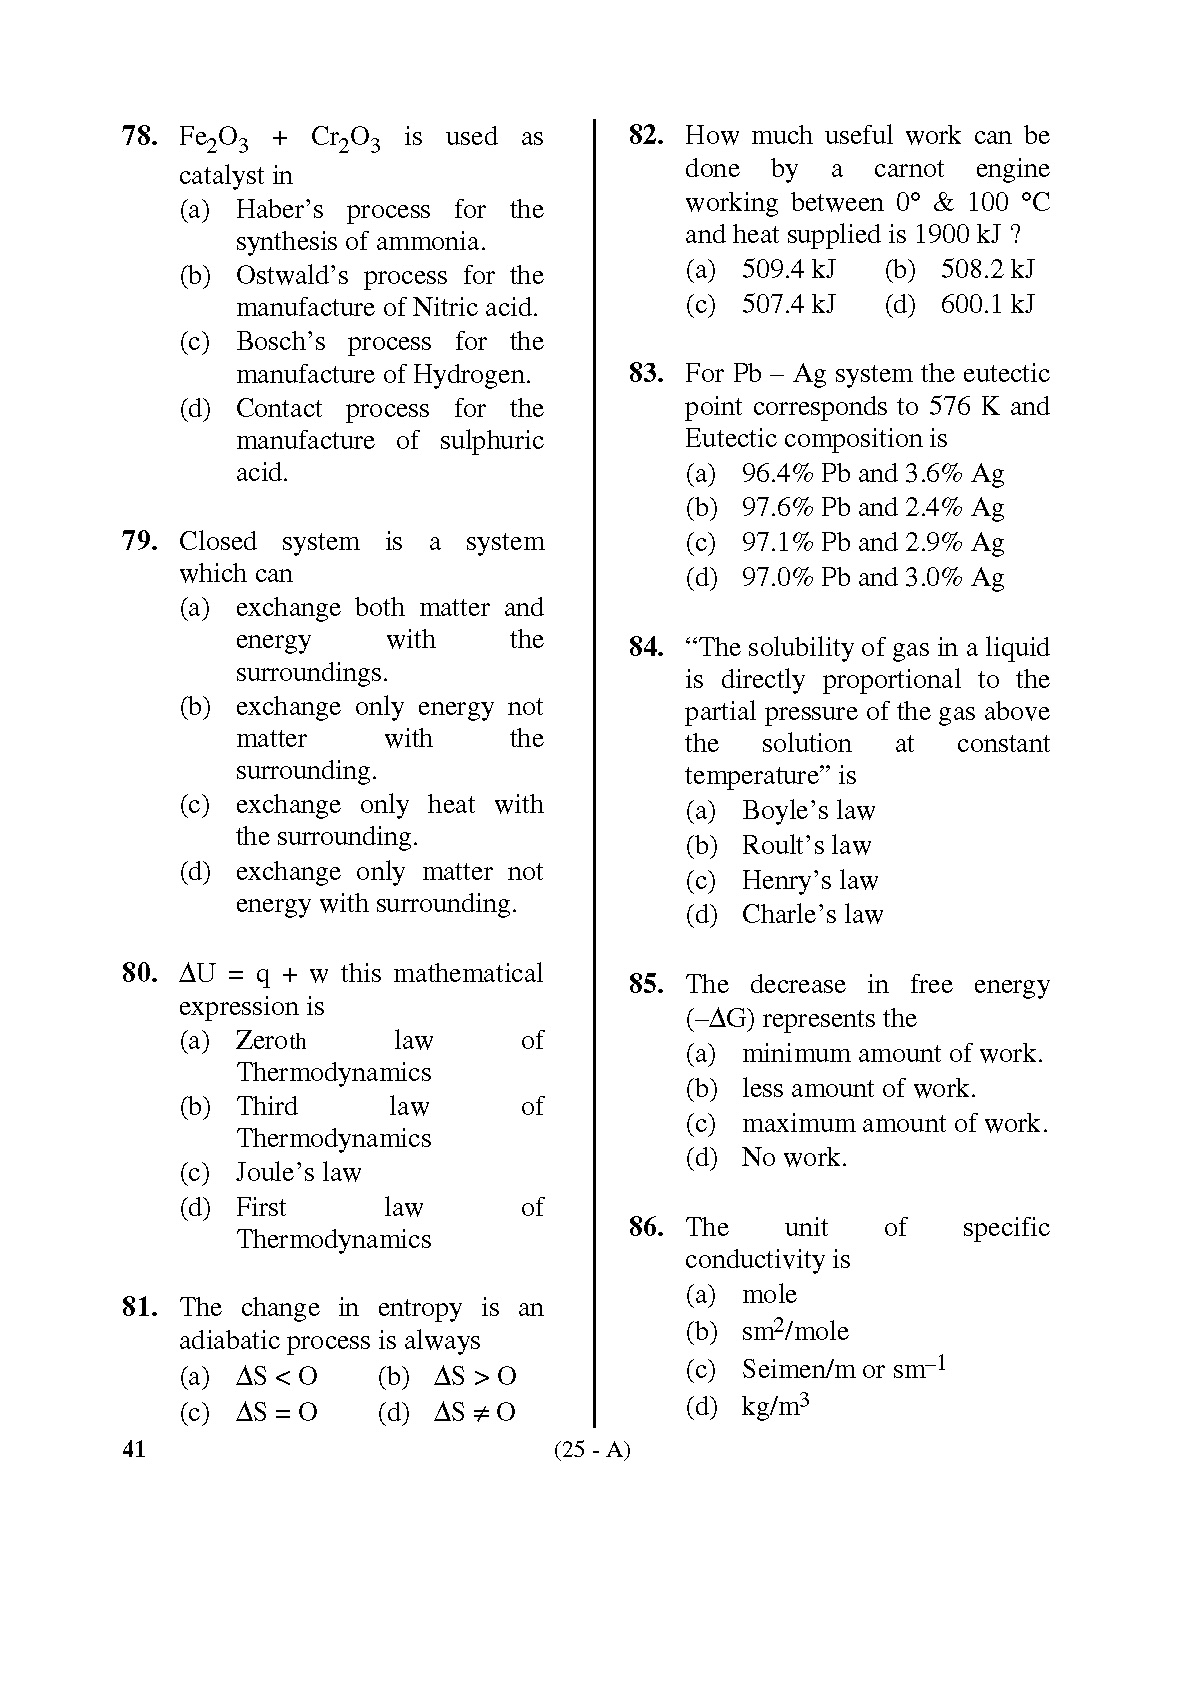 Karnataka PSC Drugs Analyst Chemistry Exam Sample Question Paper 25